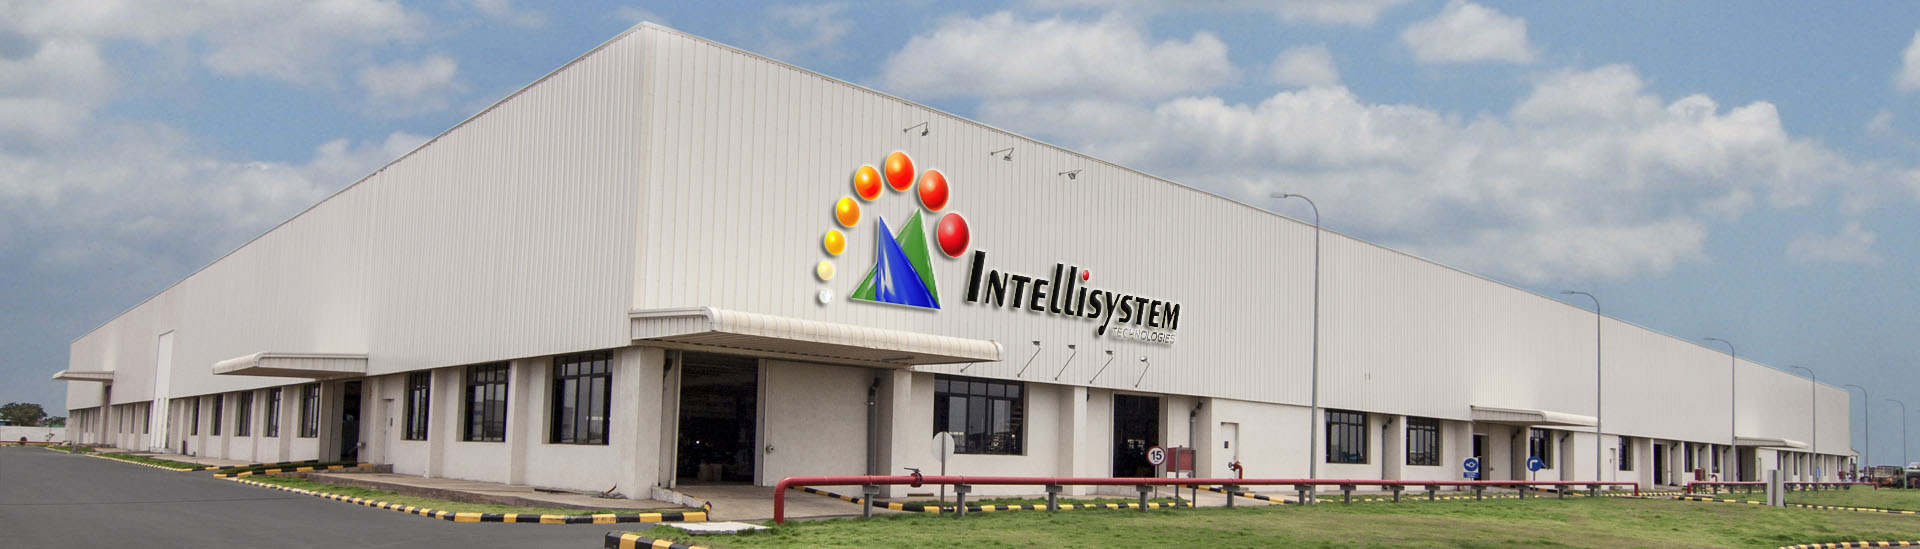 Intellisystem Technologies Farm